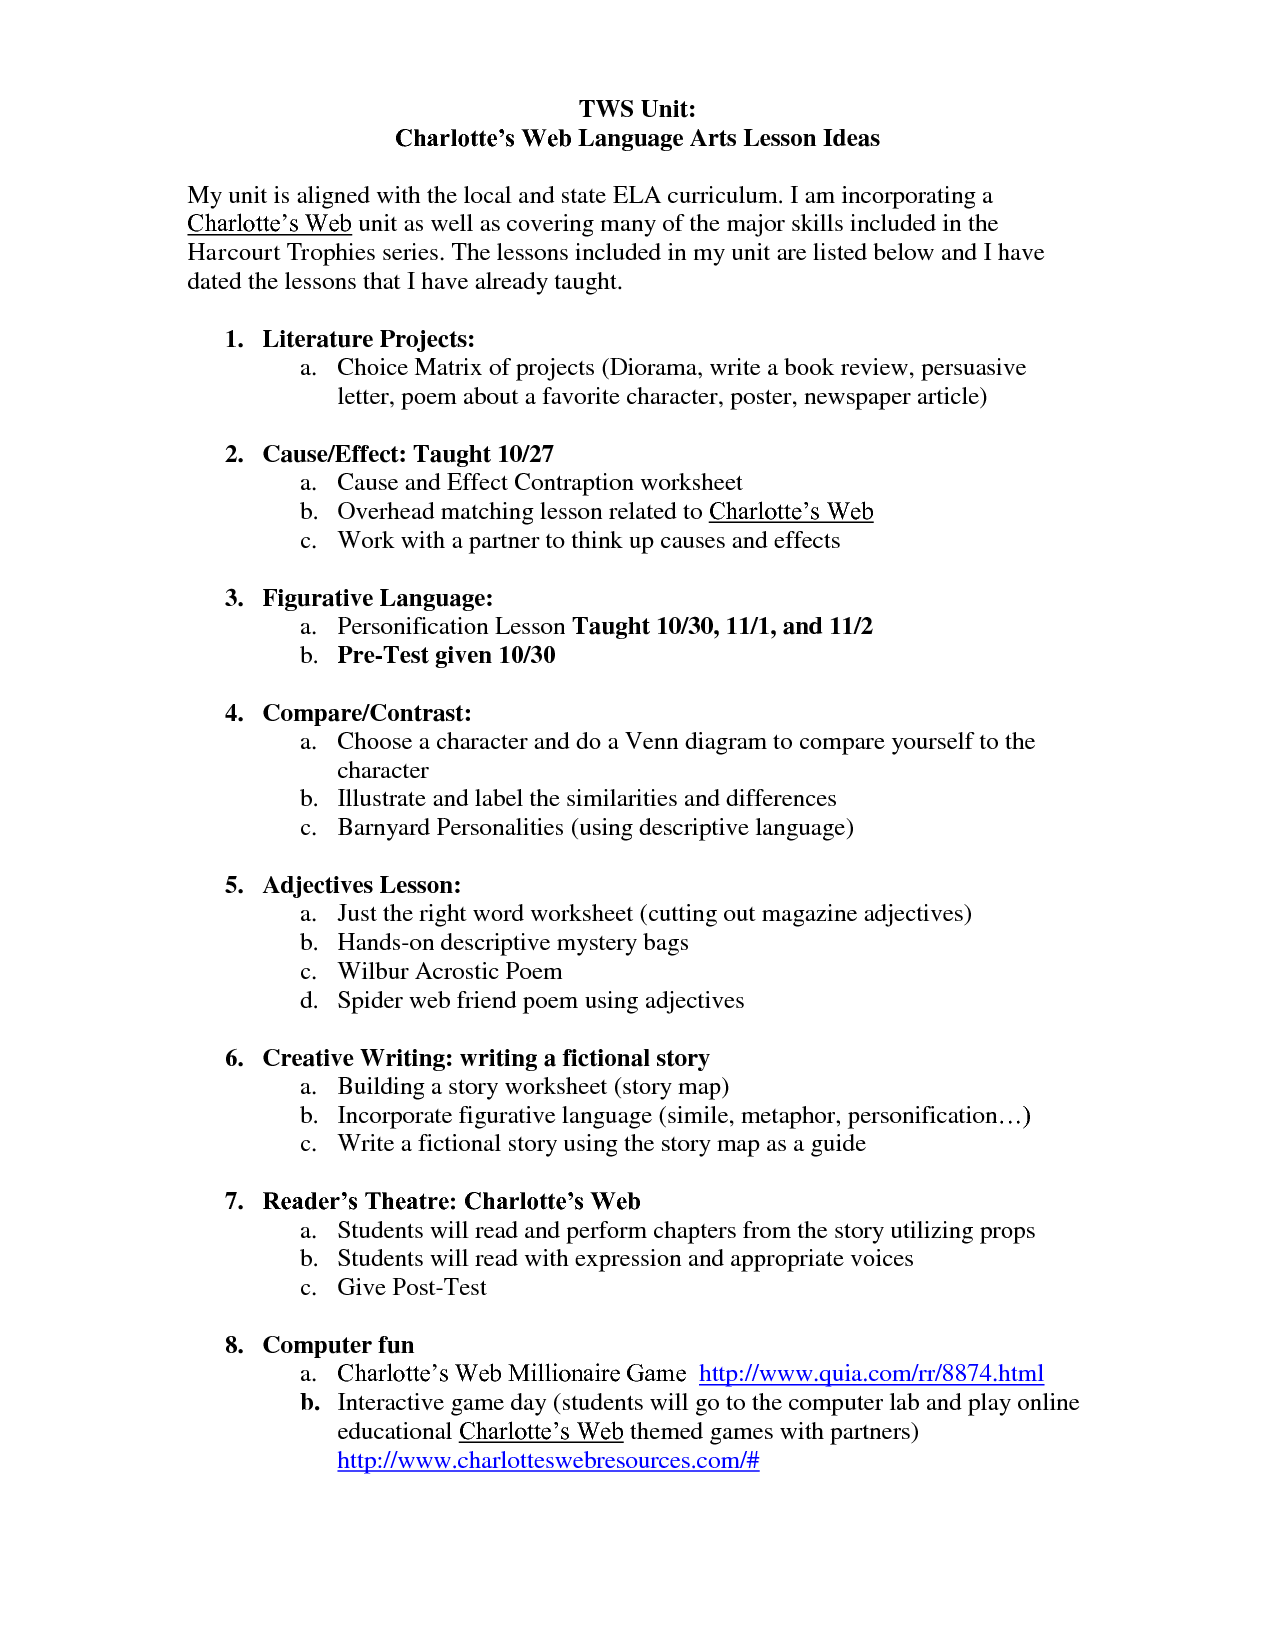 Charlottes Web Lesson Plans Worksheets Image